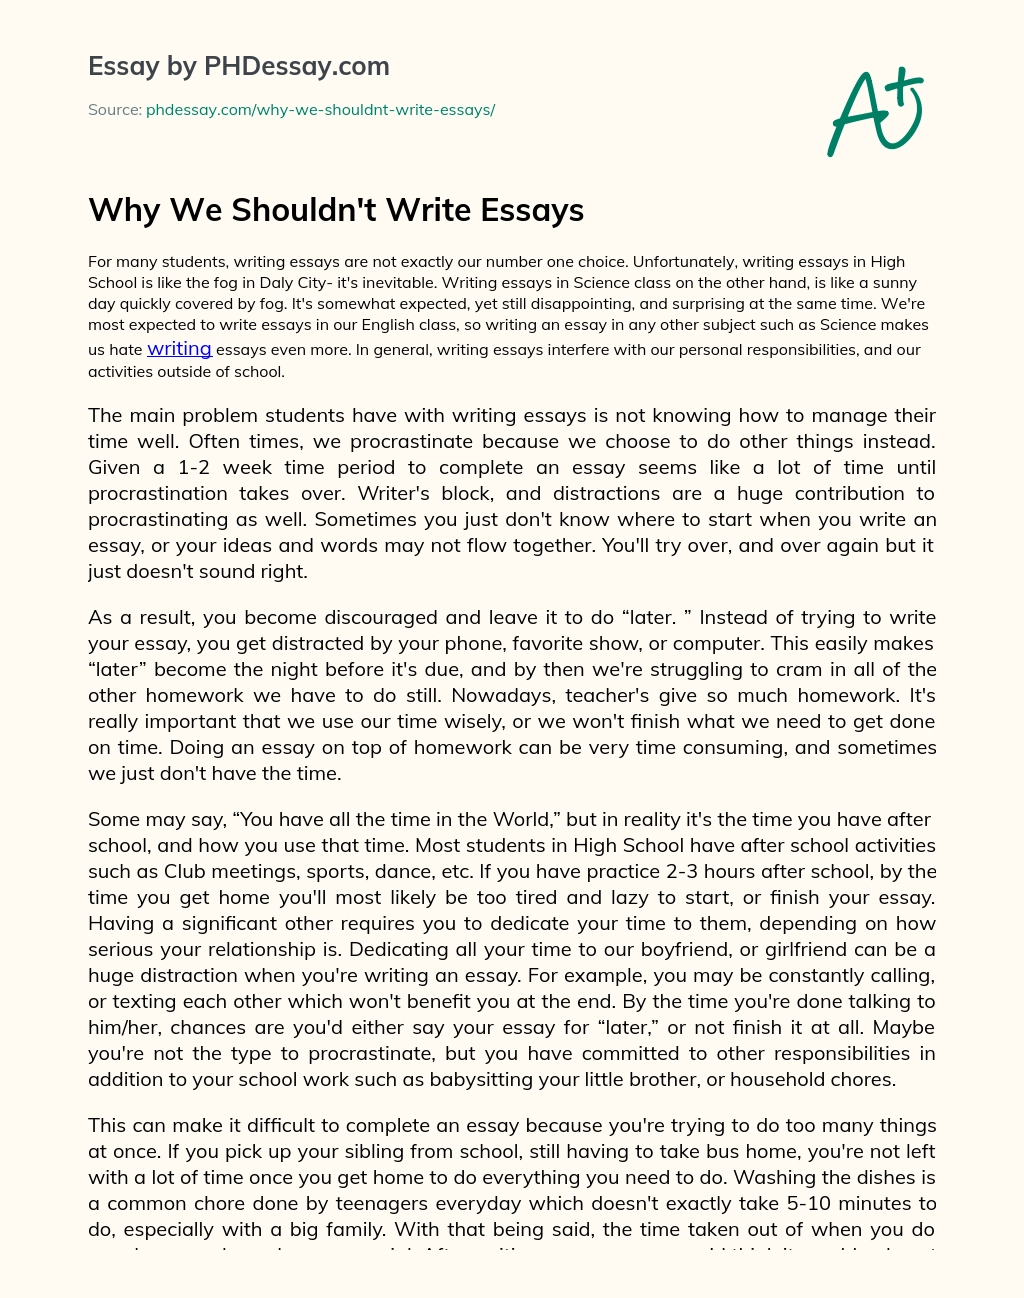 Why We Shouldn’t Write Essays essay